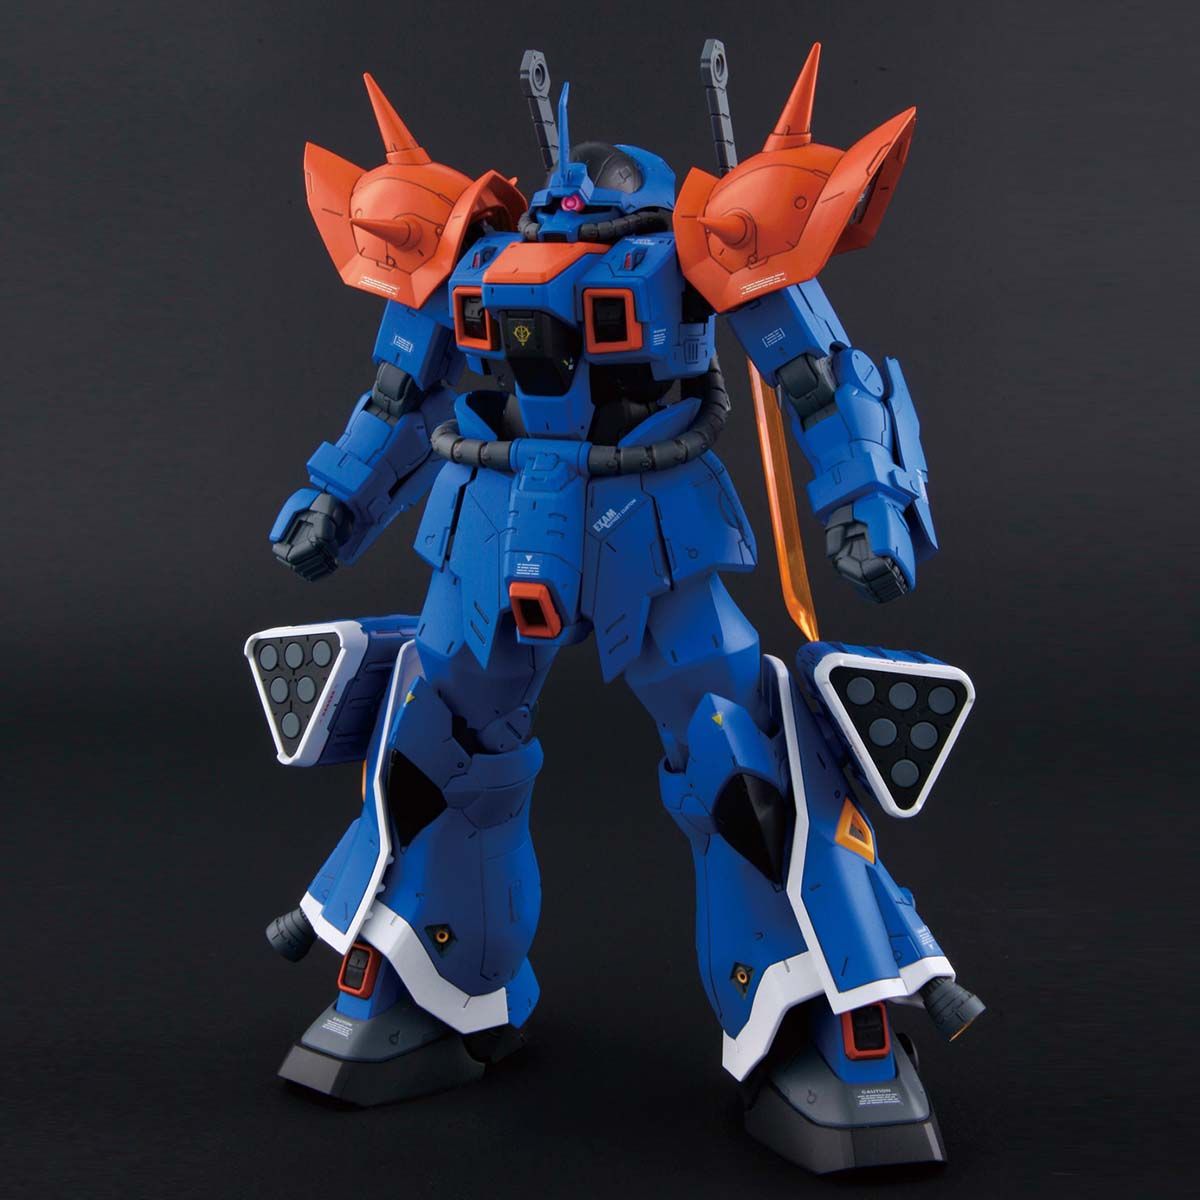 61000MG 1/100 MBF-P03R ガンダムアストレイブルーフレームセカンドリバイ [Gundam Astray Blue Frame 2nd Revise]  5063574 4573102635747 0160998 4543112609984